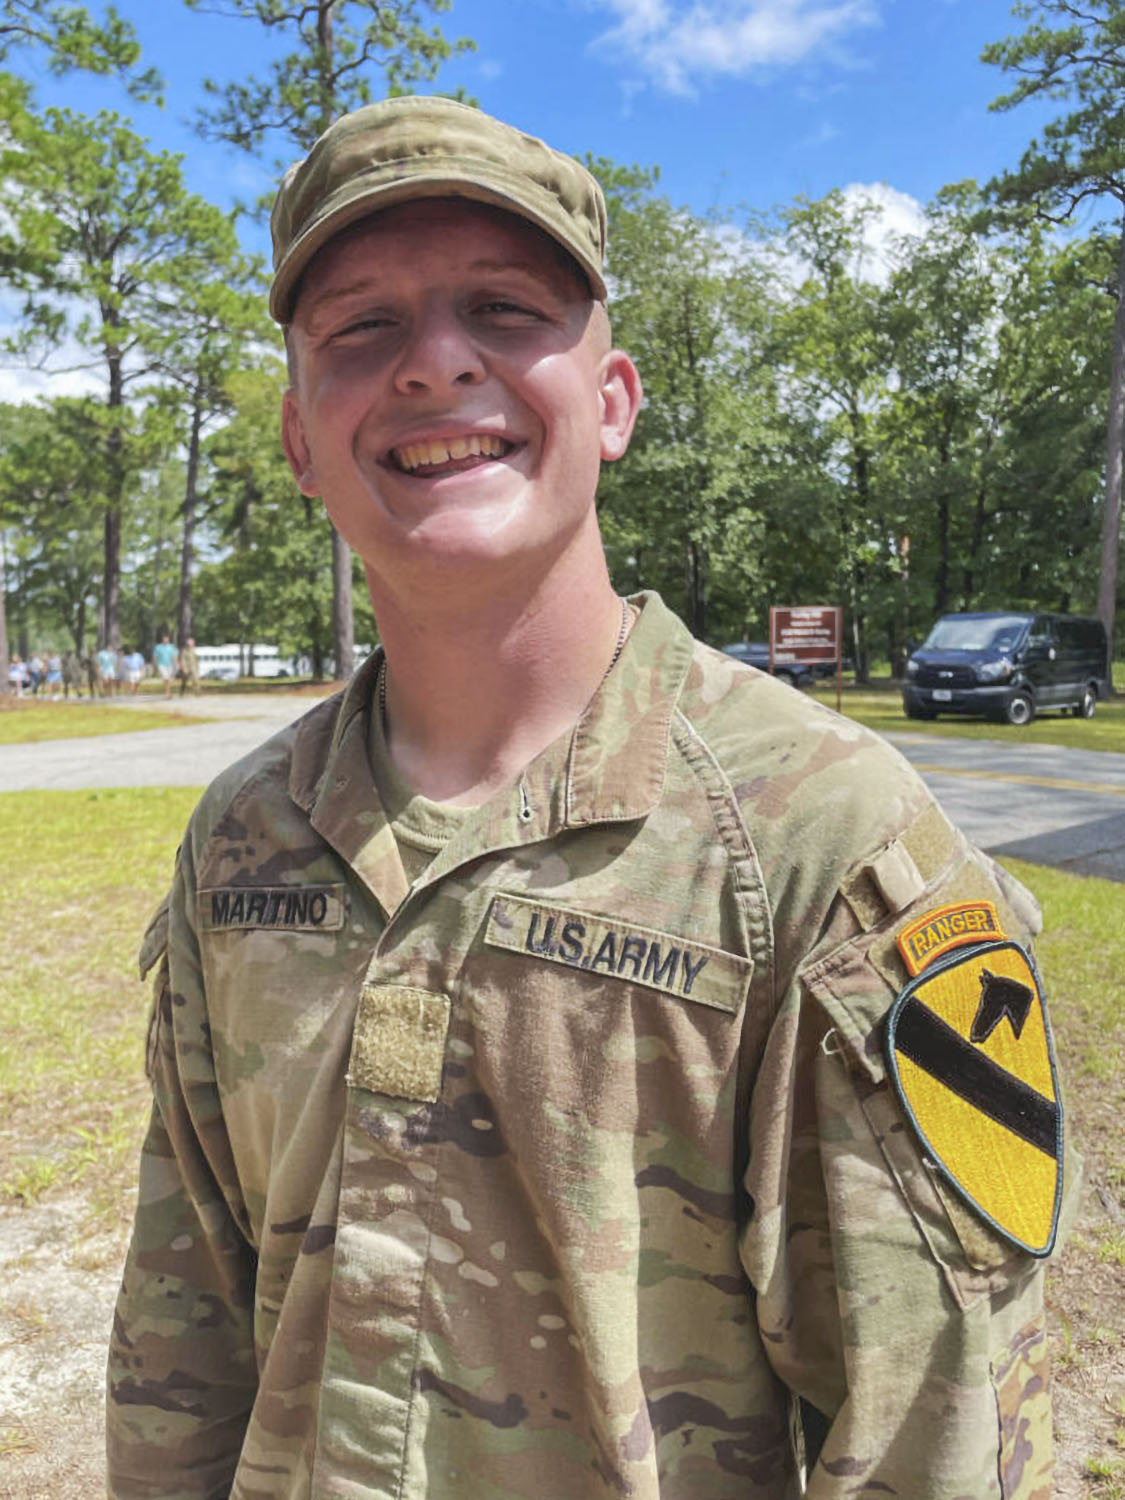 US Army Ranger Martino smiles for a photo